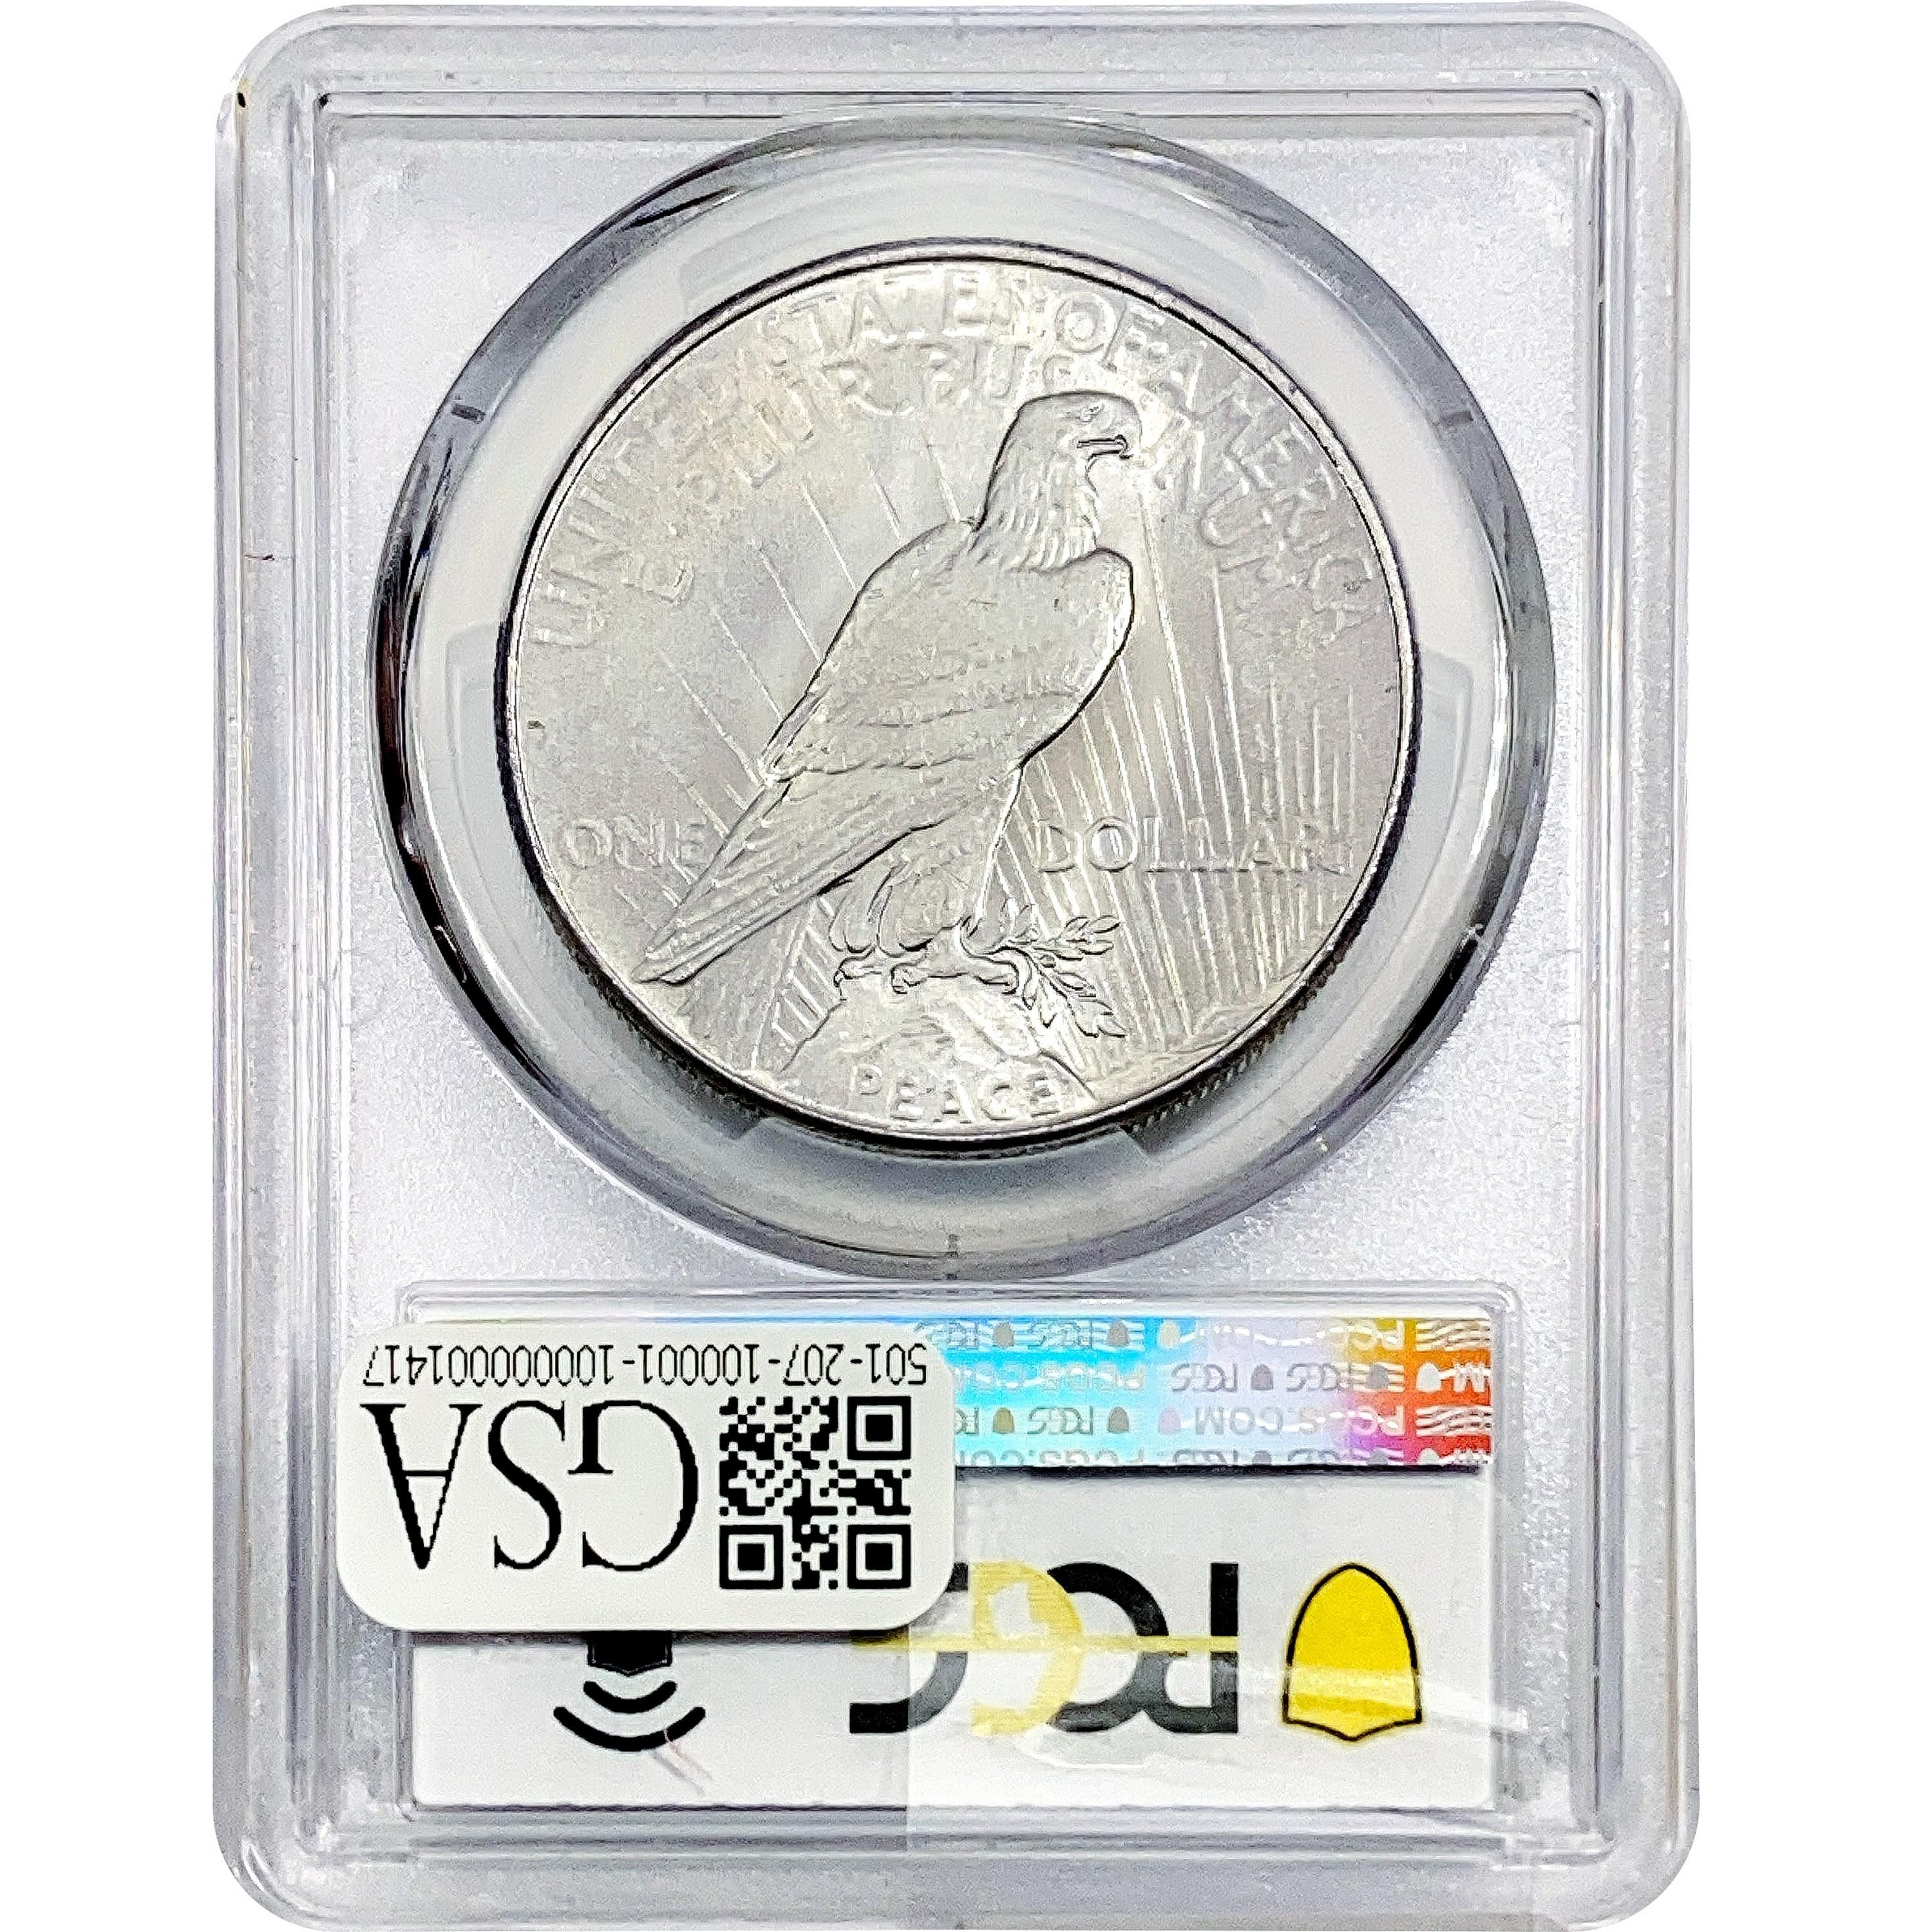 1934 Silver Peace Dollar PCGS MS64